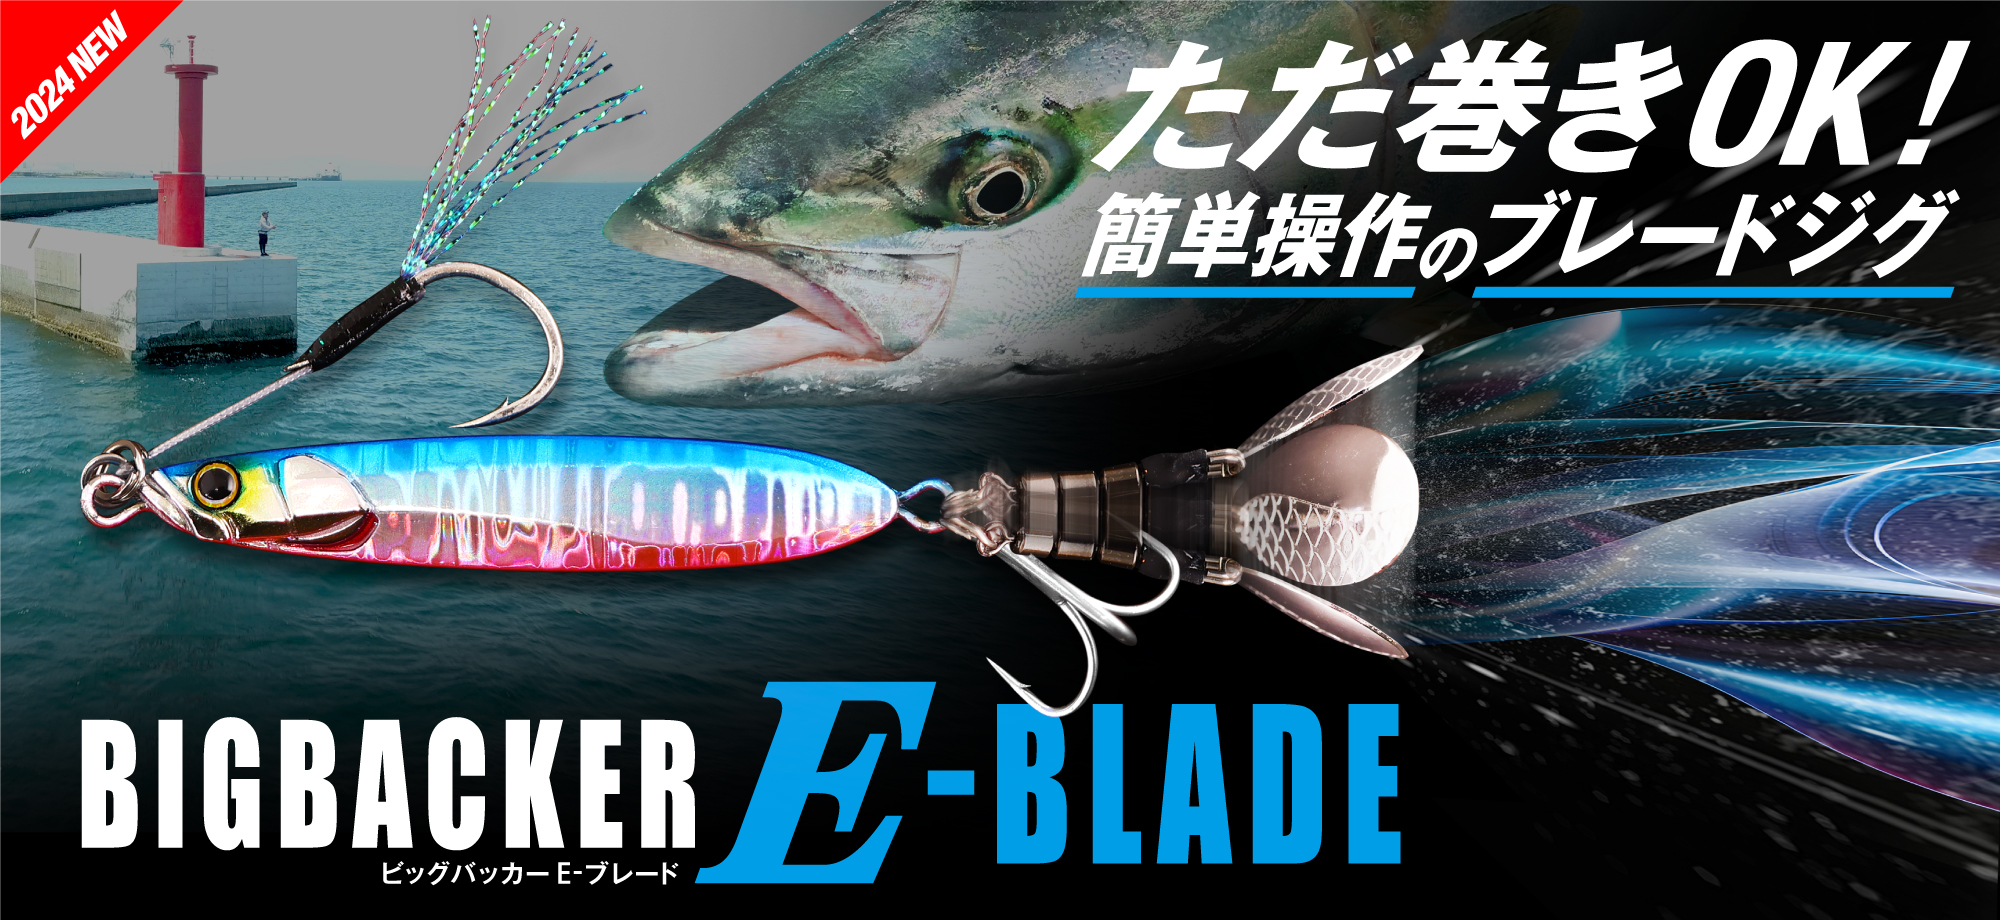 BIGBACKER E-BRADE/ビッグバッカー E-ブレード